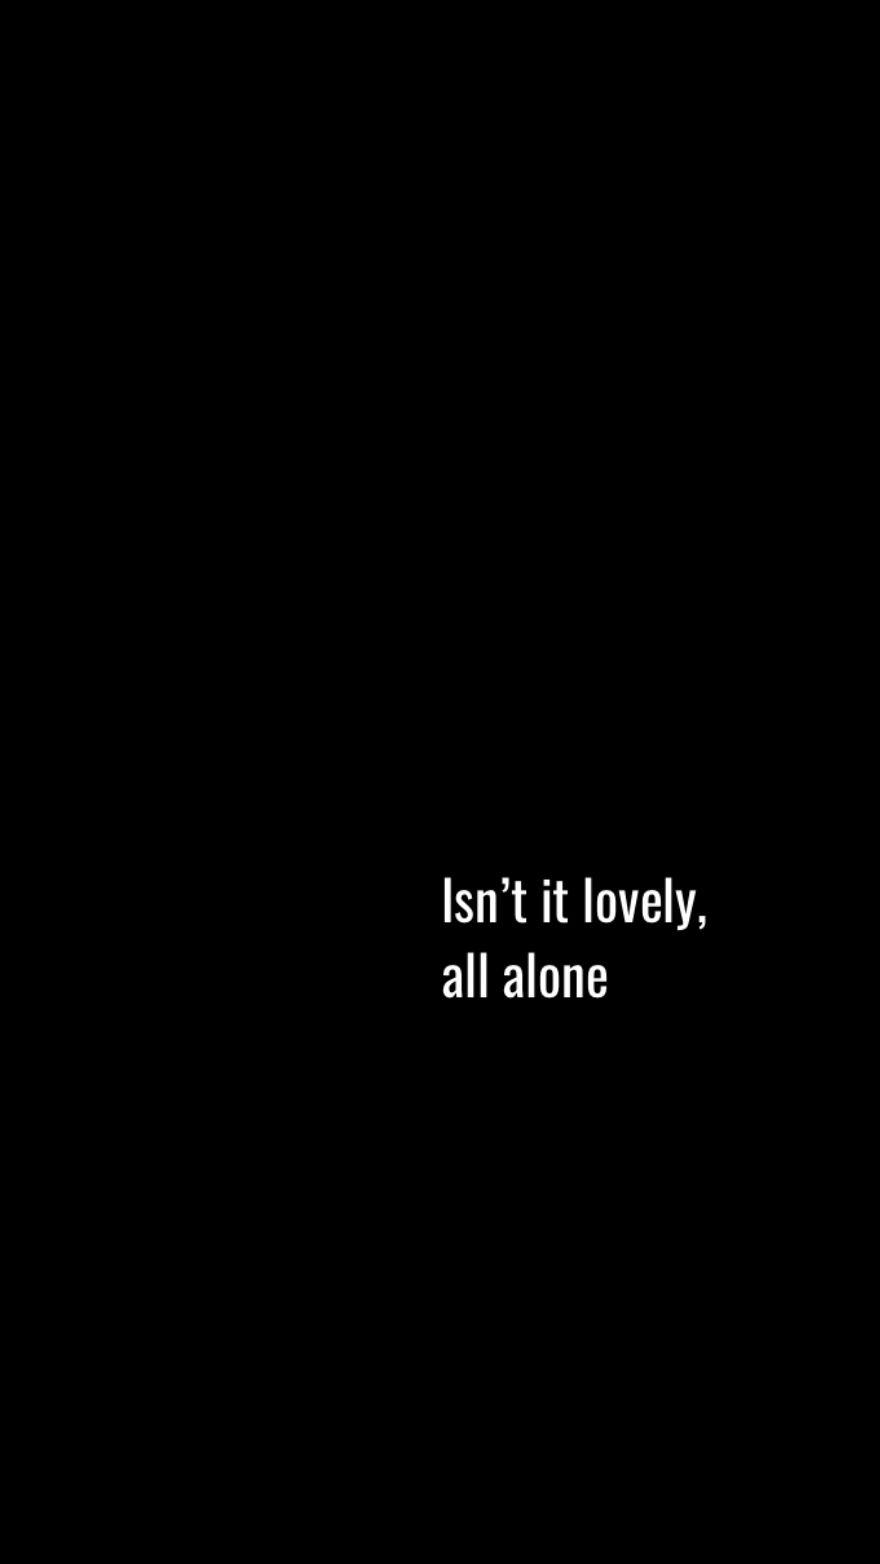 Isn't it lovely, all alone. Song lyrics wallpaper, Song